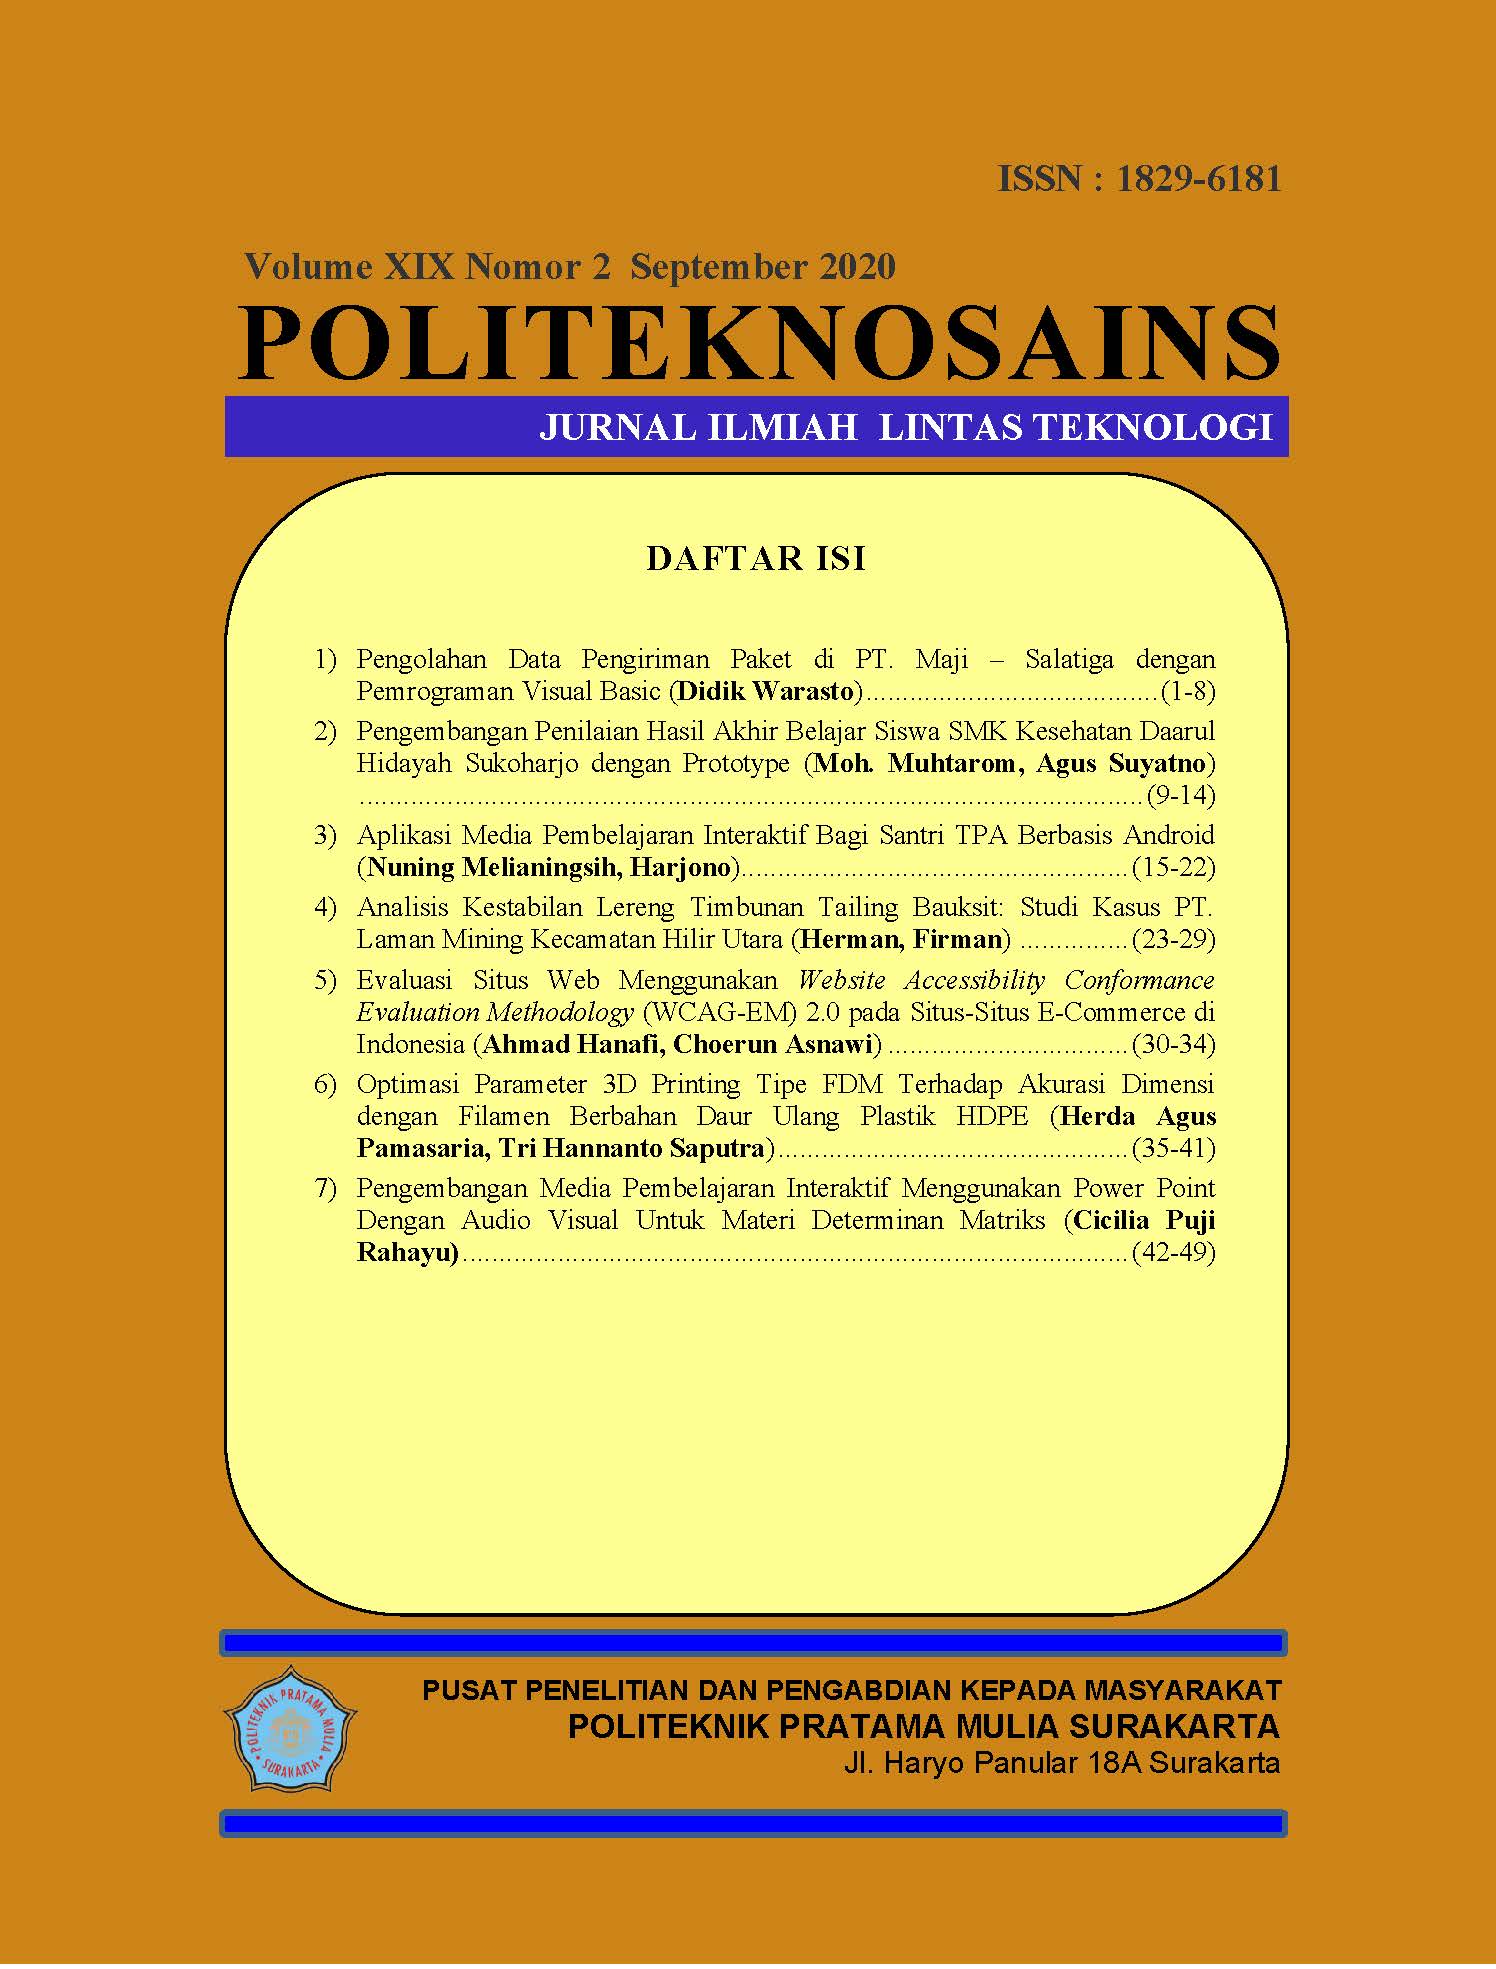 					Lihat Vol 19 No 2 (2020): Jurnal Politeknosains Volume 19 Nomor 2 - September 2020
				